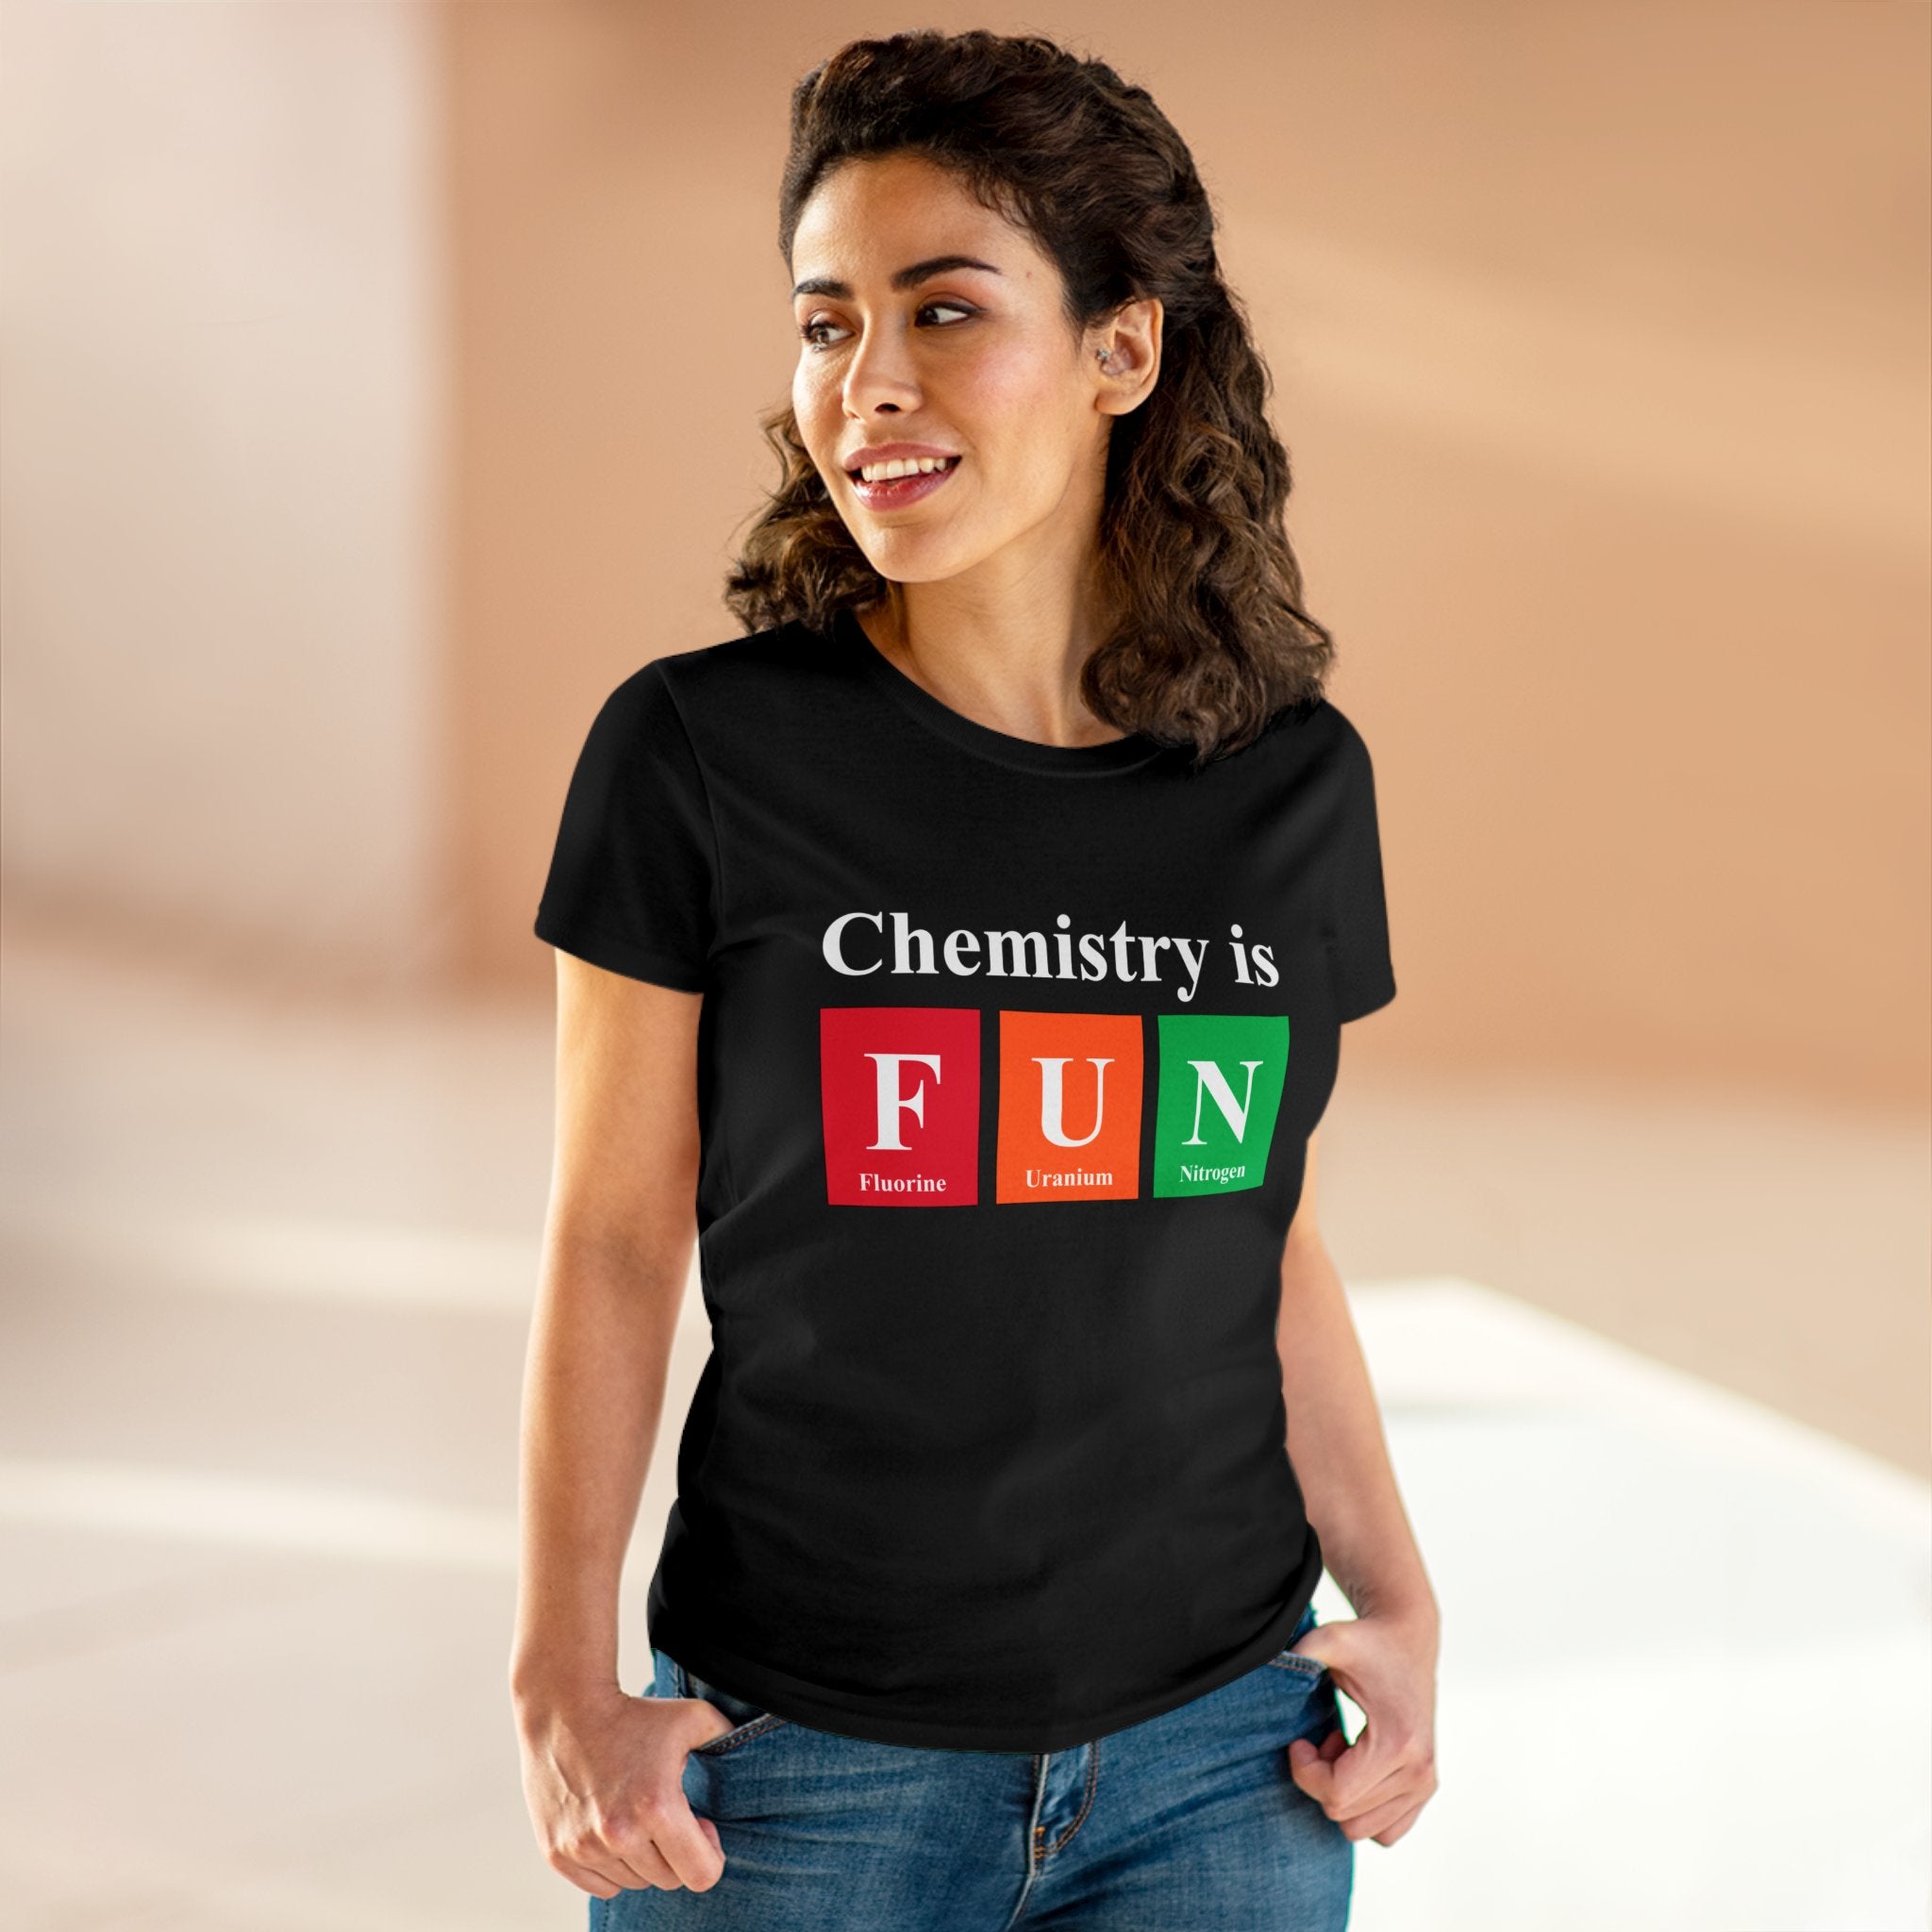 Chemistry is FUN - Women's Tee